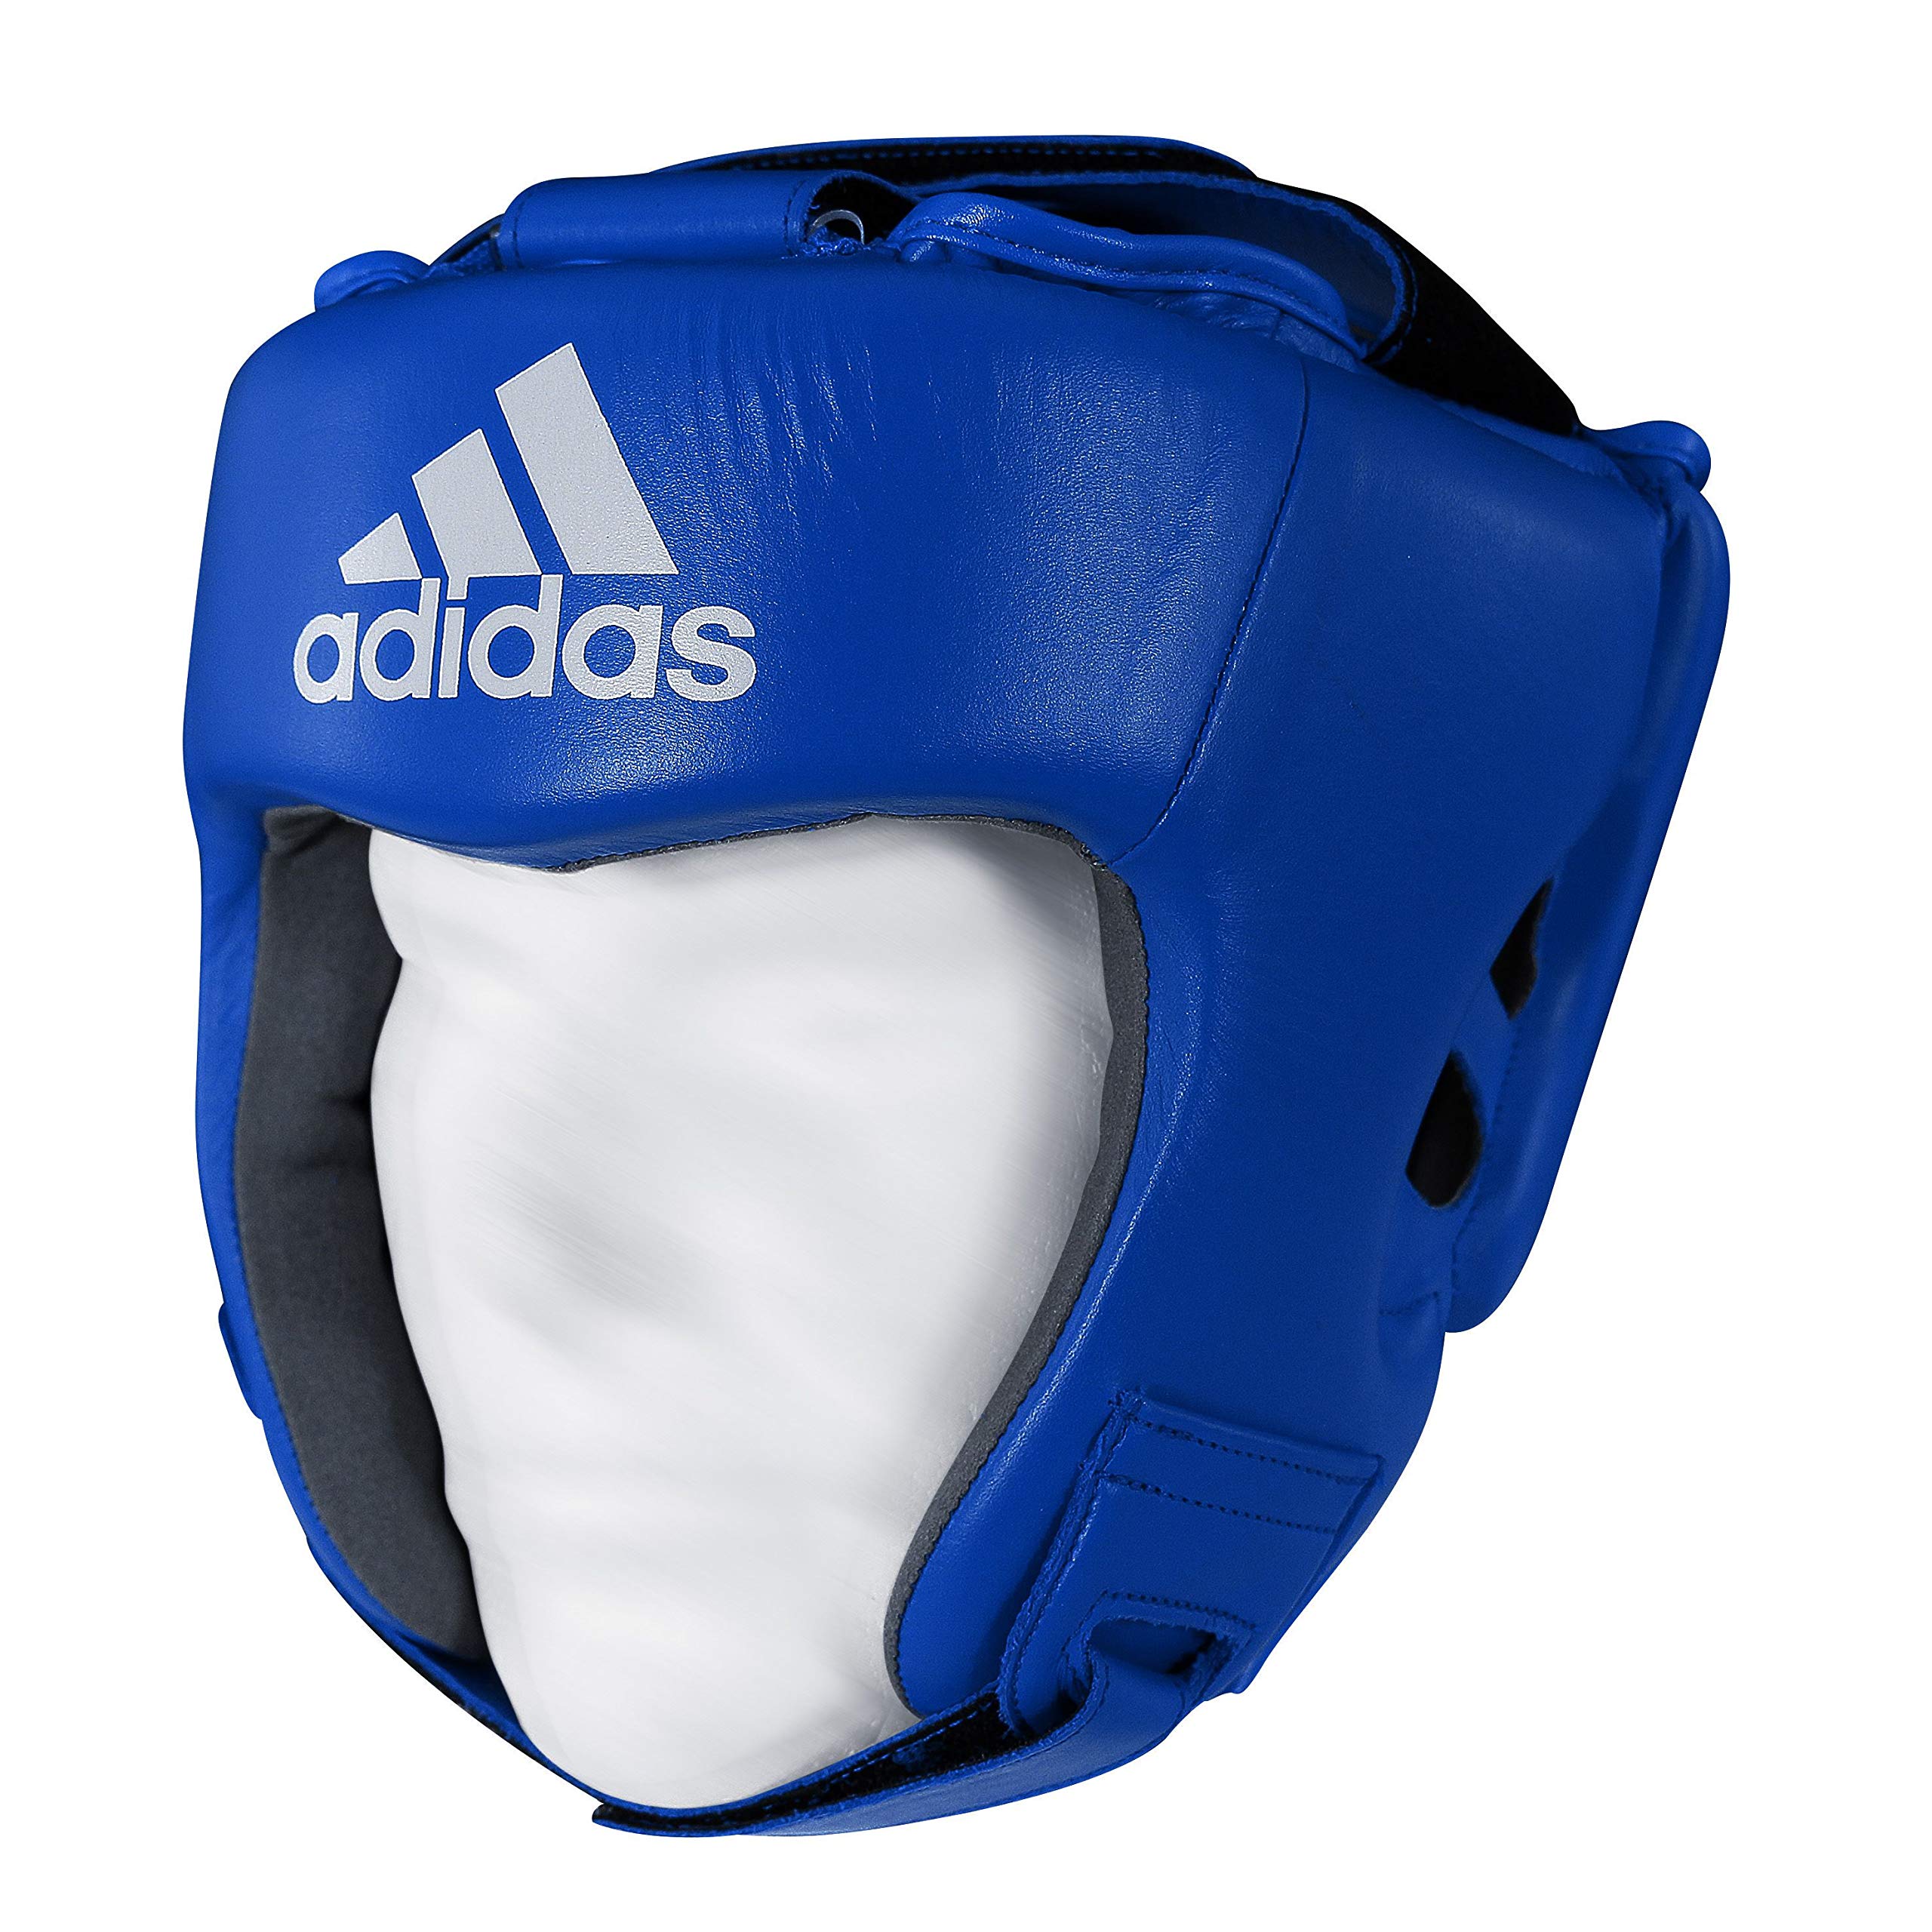 adidas AIBA Boxing Kopfschutz, Blau, L